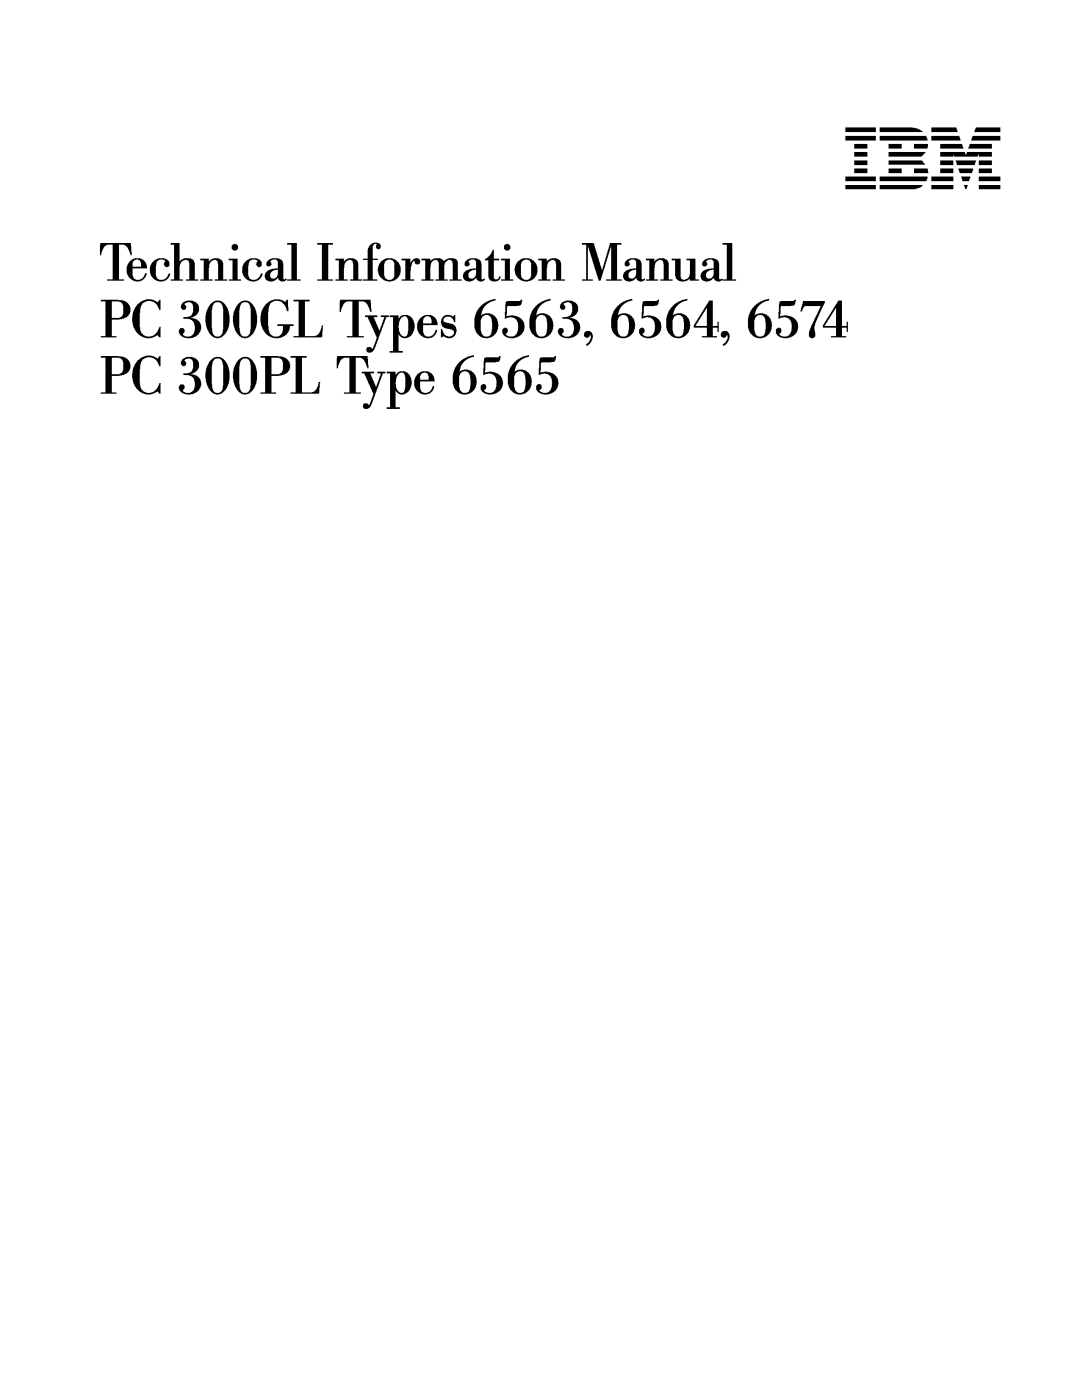 IBM PC 300GL manual hcchM mlmiM mlni hcc mlml 